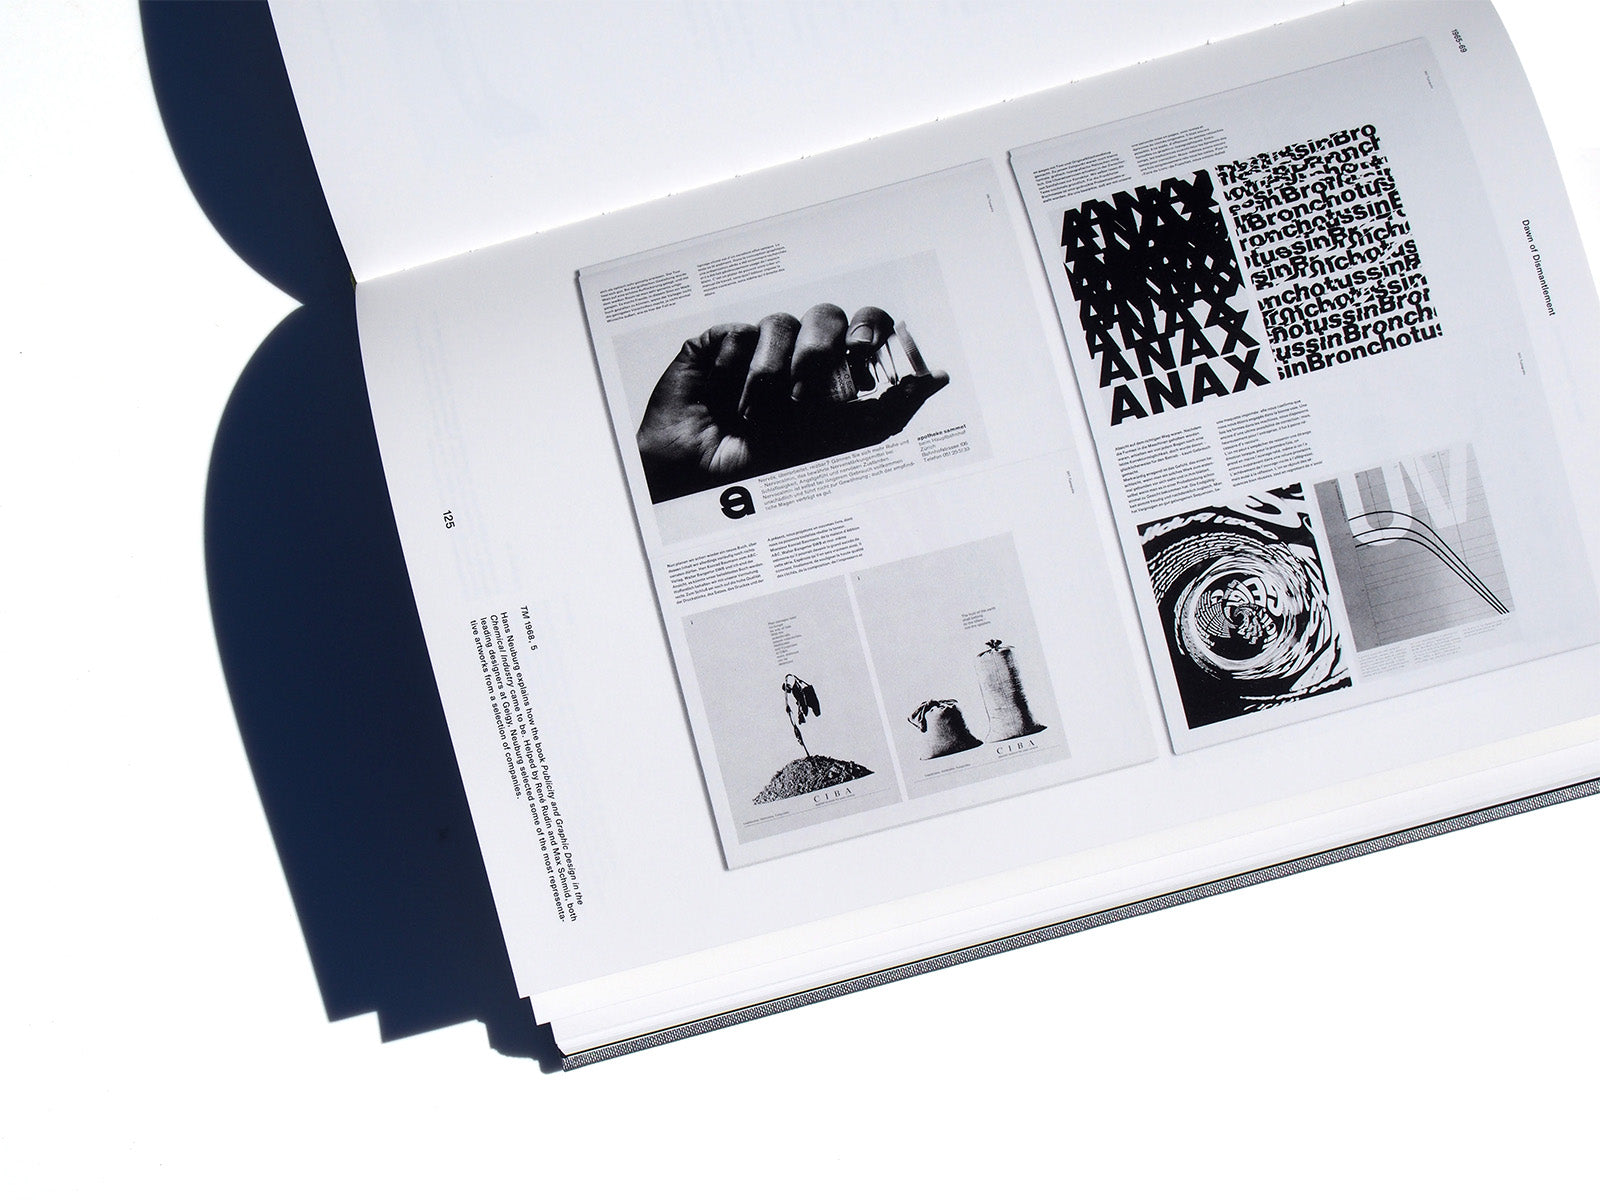 30 Years of Swiss Typographic Discourse in the Typografische Monatsblätter: TM RSI SGM 1960 – 90